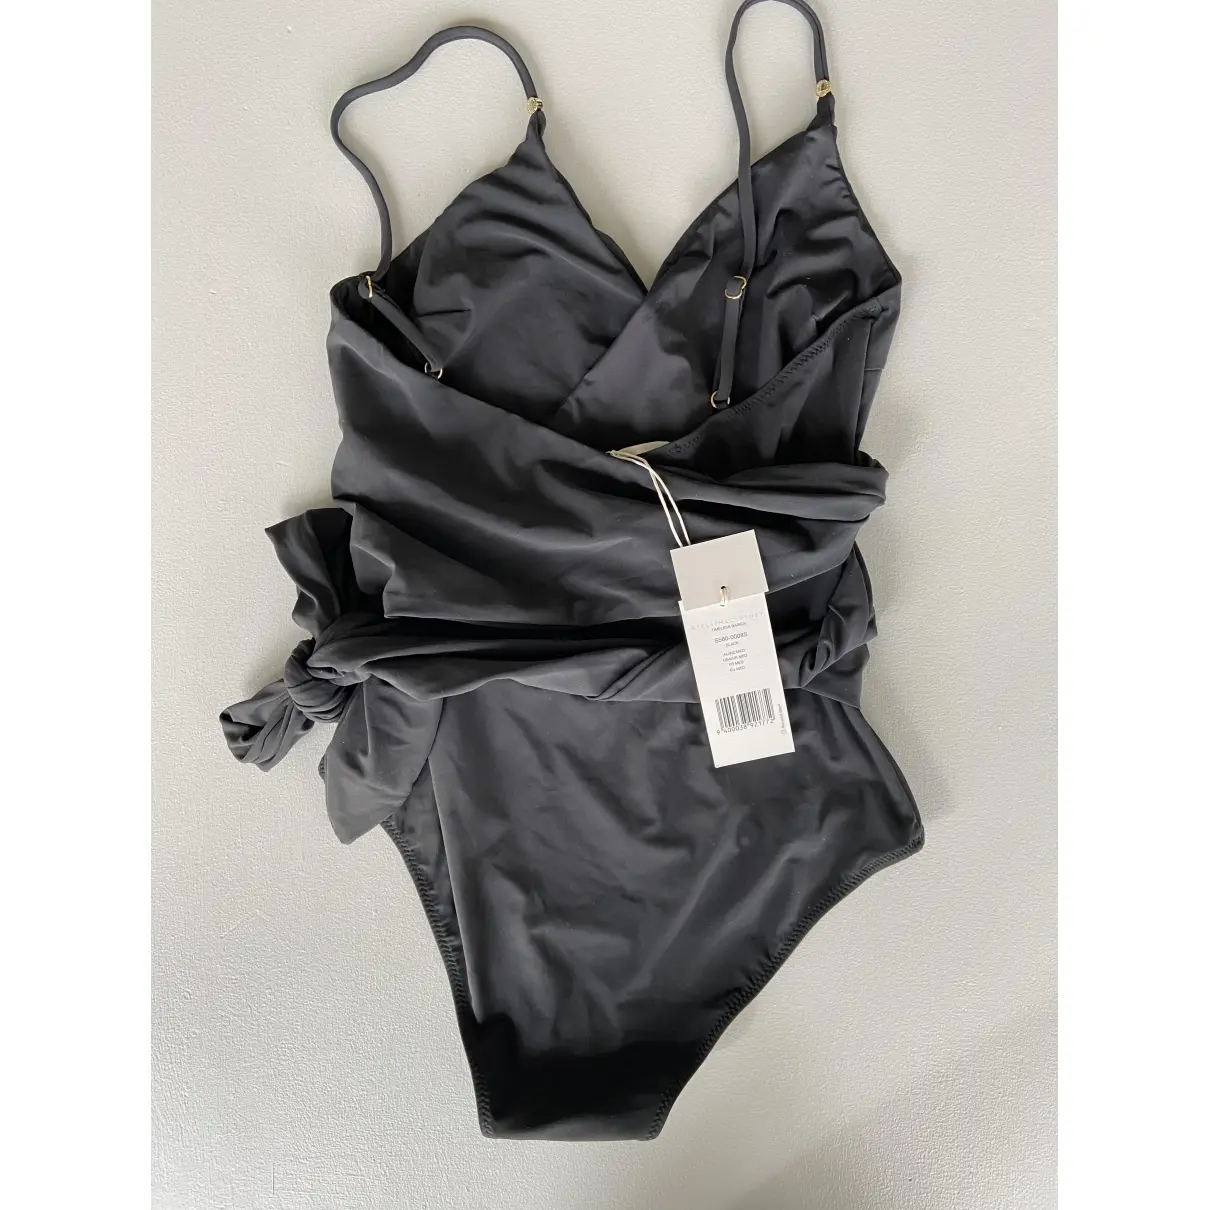 Stella McCartney One-piece swimsuit for sale